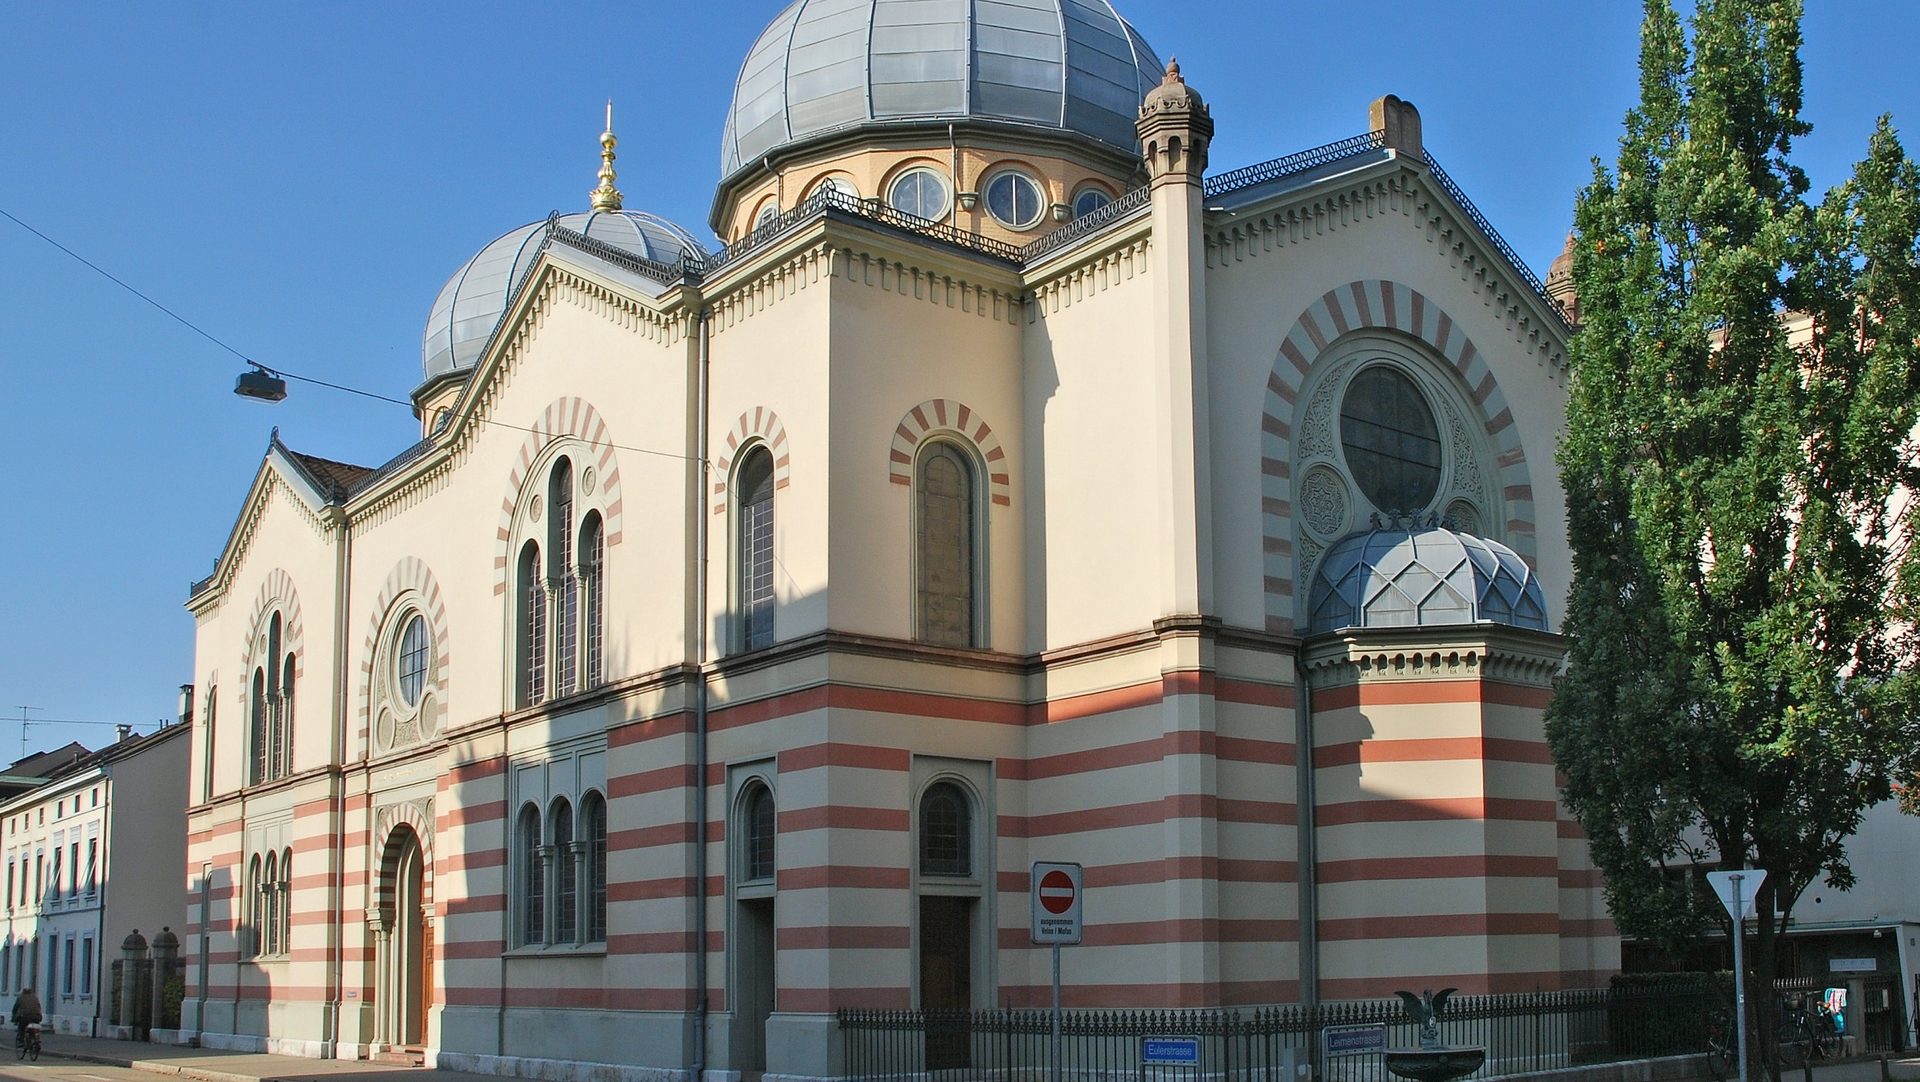 La synagogue de Bâle | wikimedia commons Wladyslaw CC BY-SA 3.0